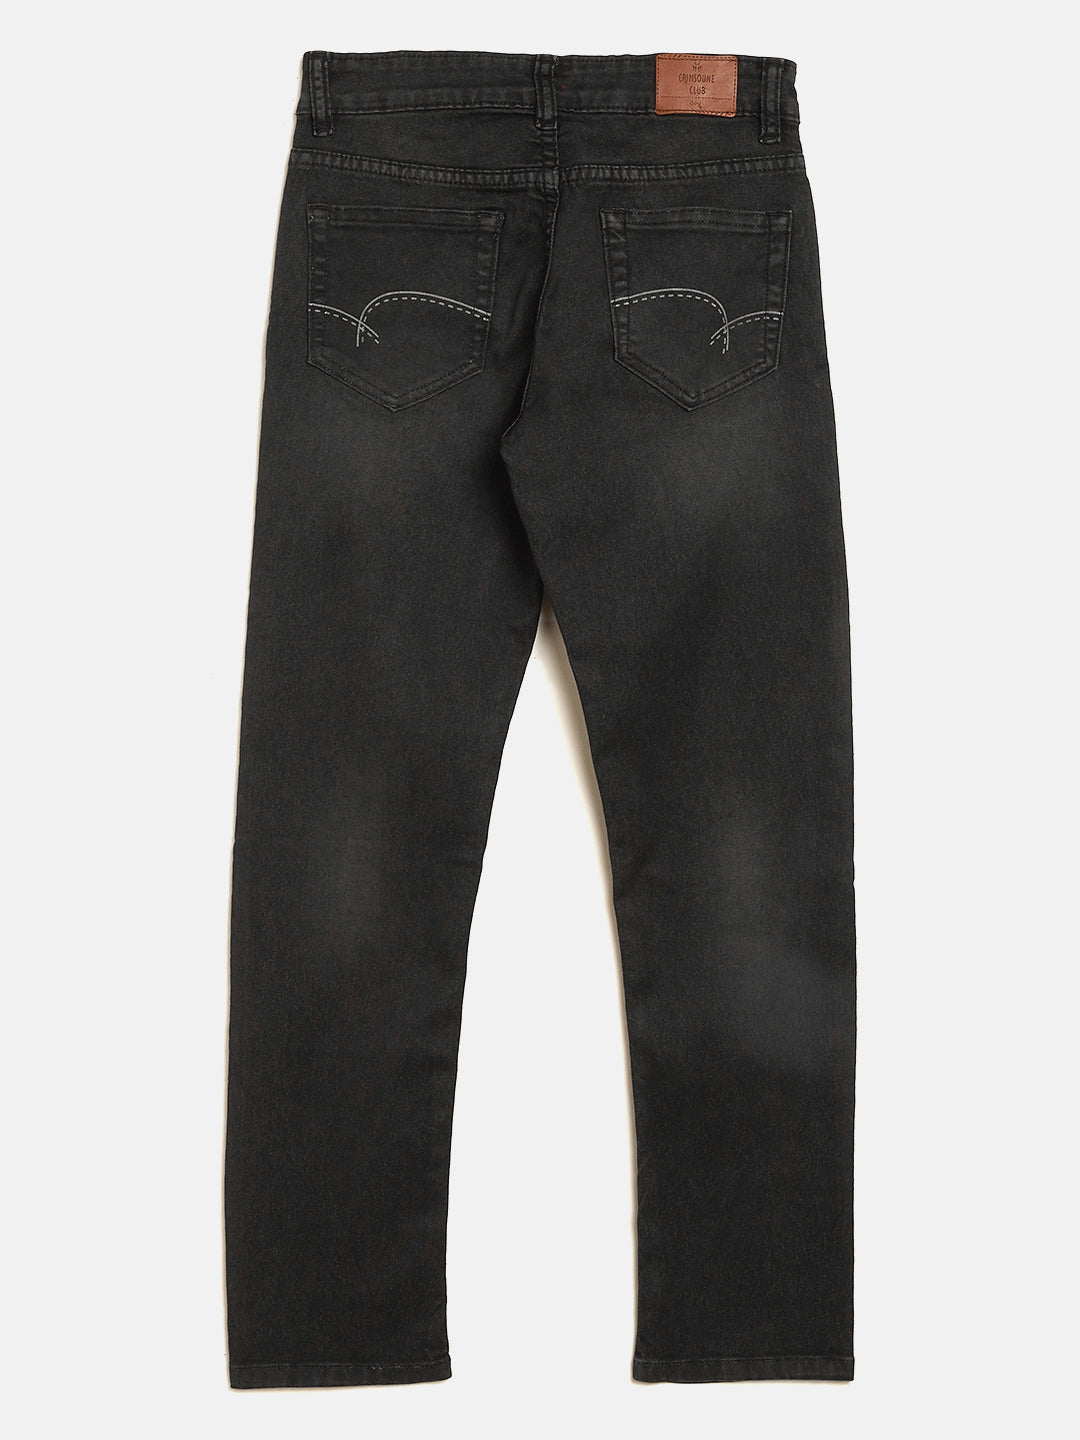 Black Slim Fit Denim - Boys Jeans